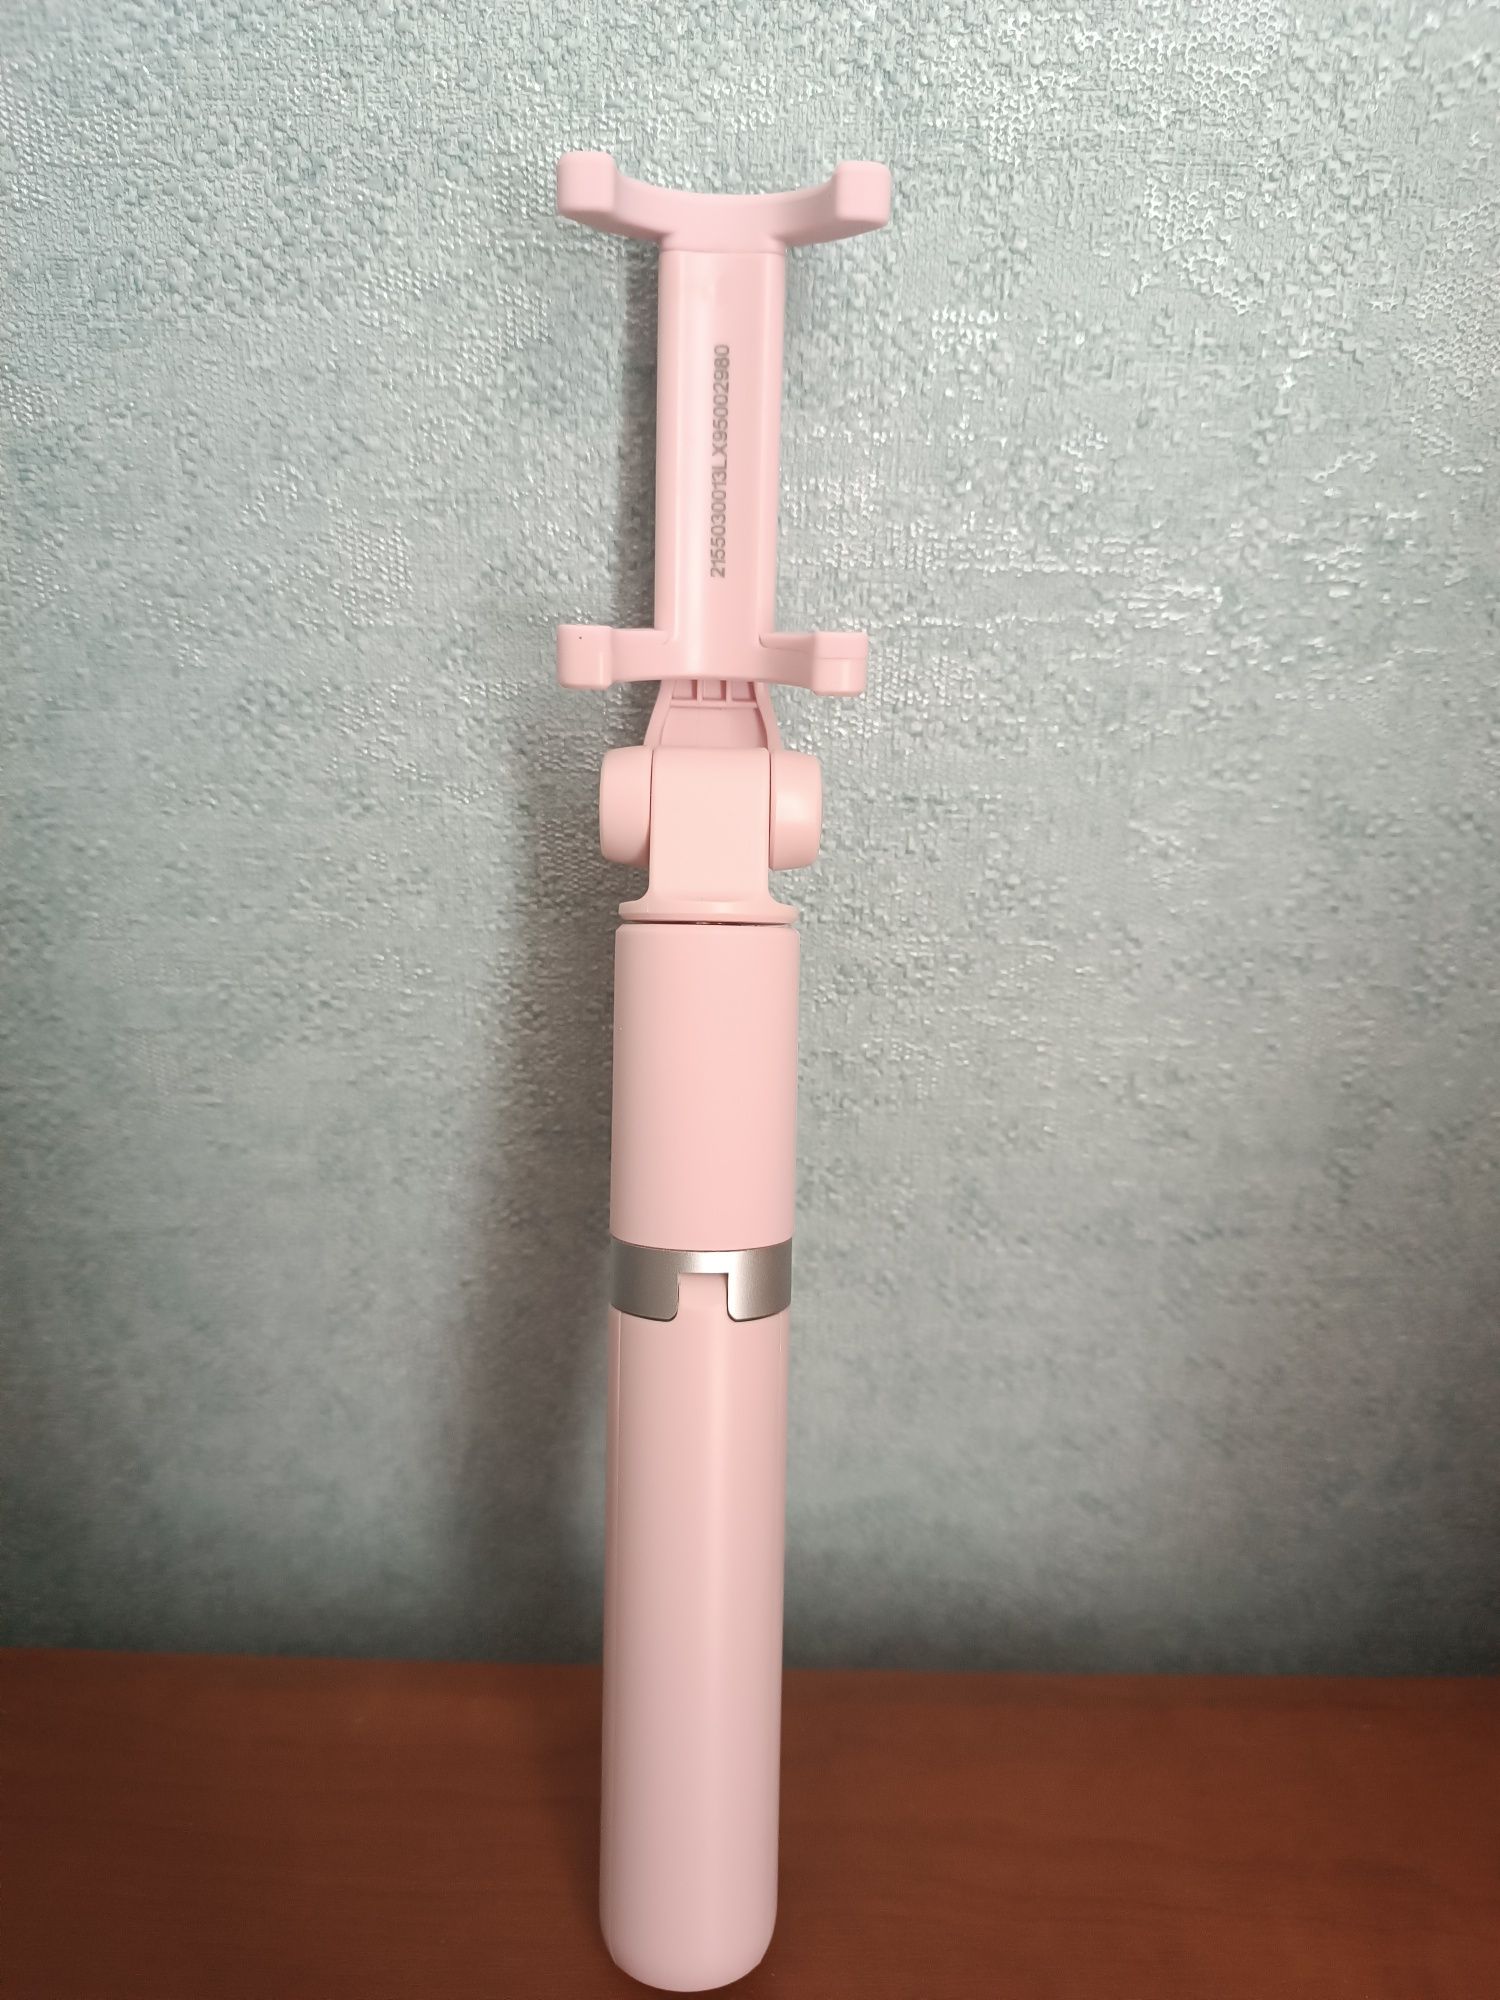 Селфи-палка – Huawei Honor AF15, штатив и пульт